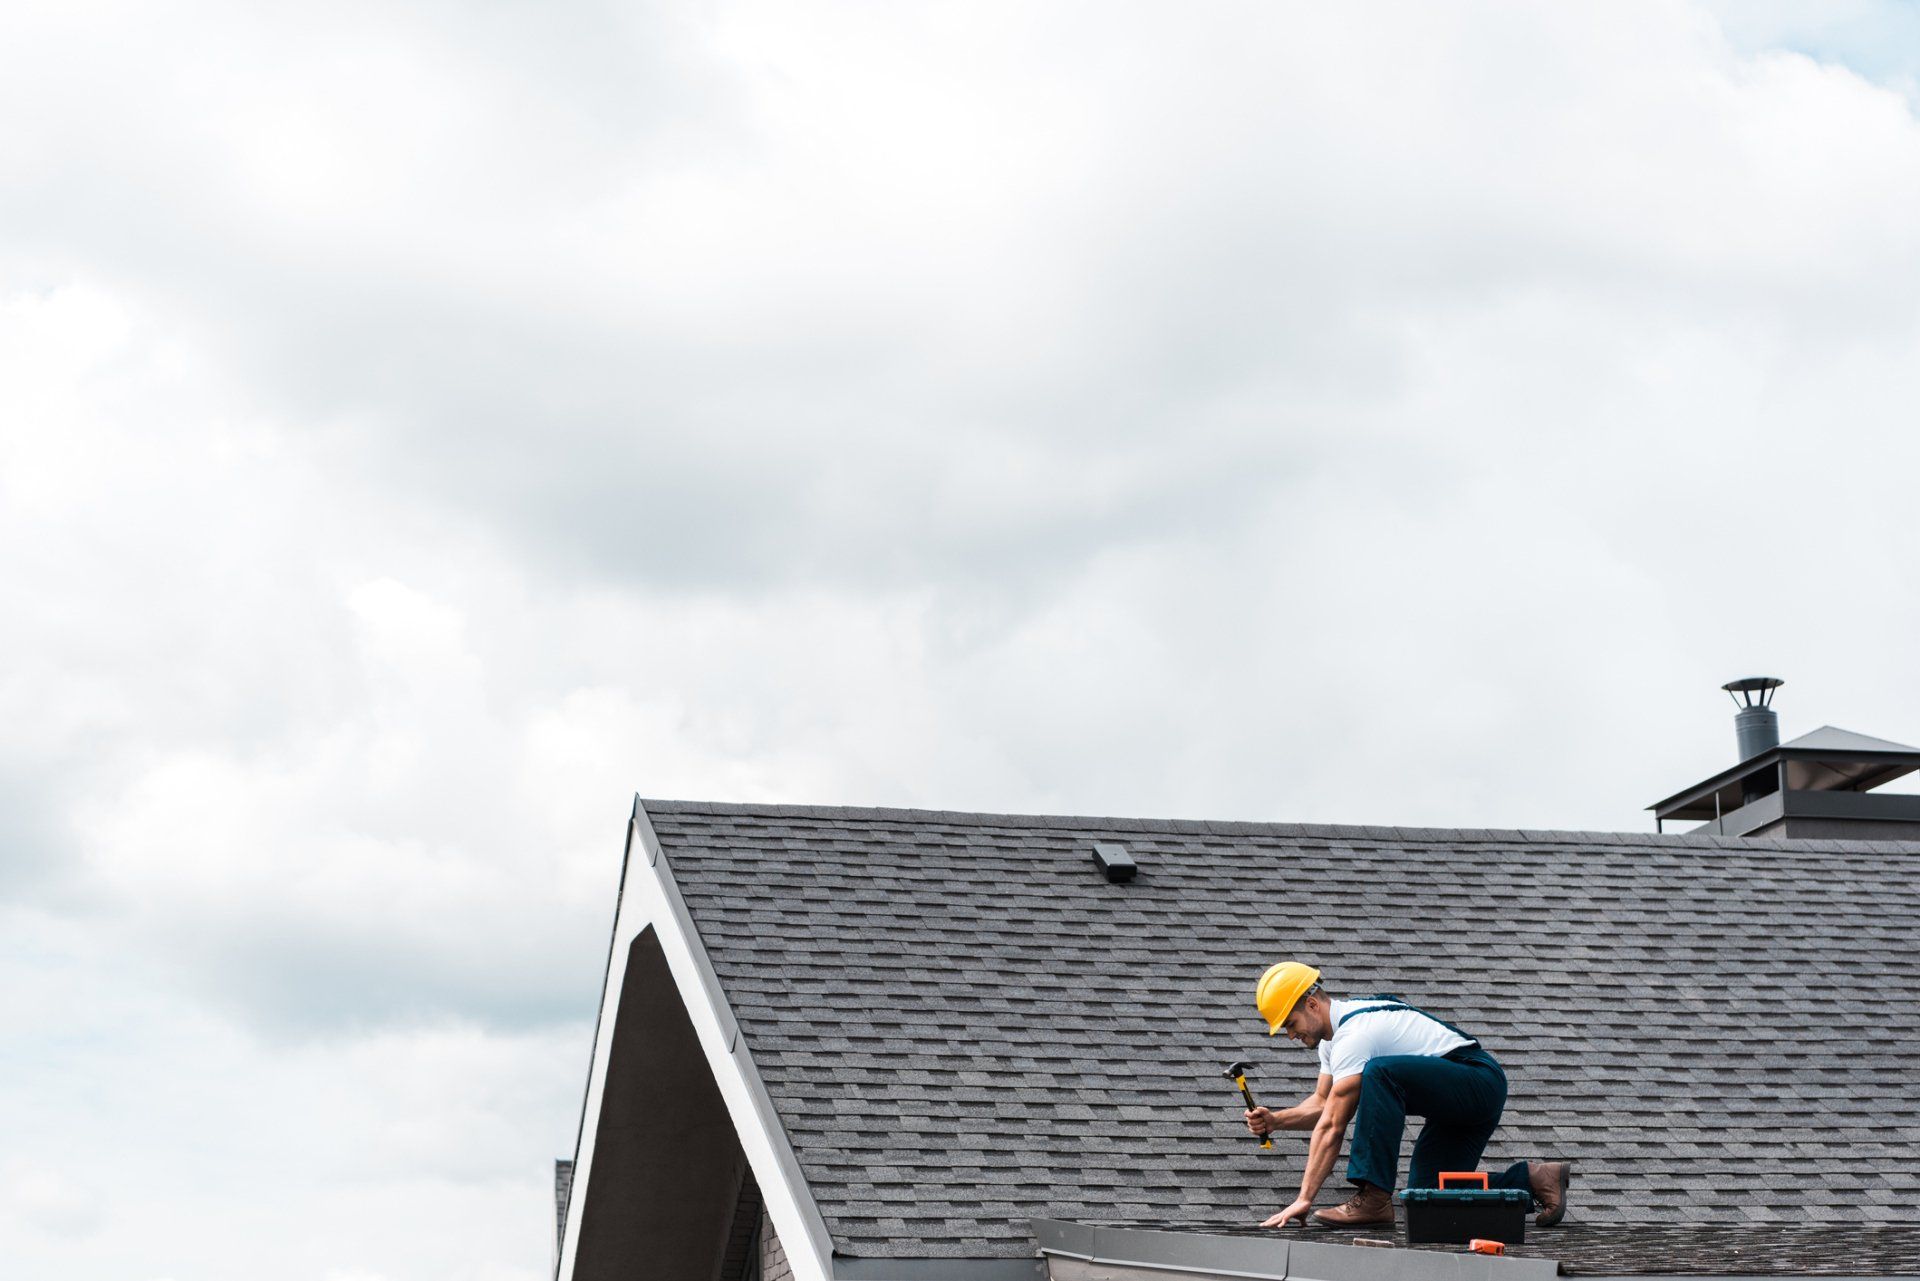 Repairman repairing roof — Benton, AR — Advanced Roofing